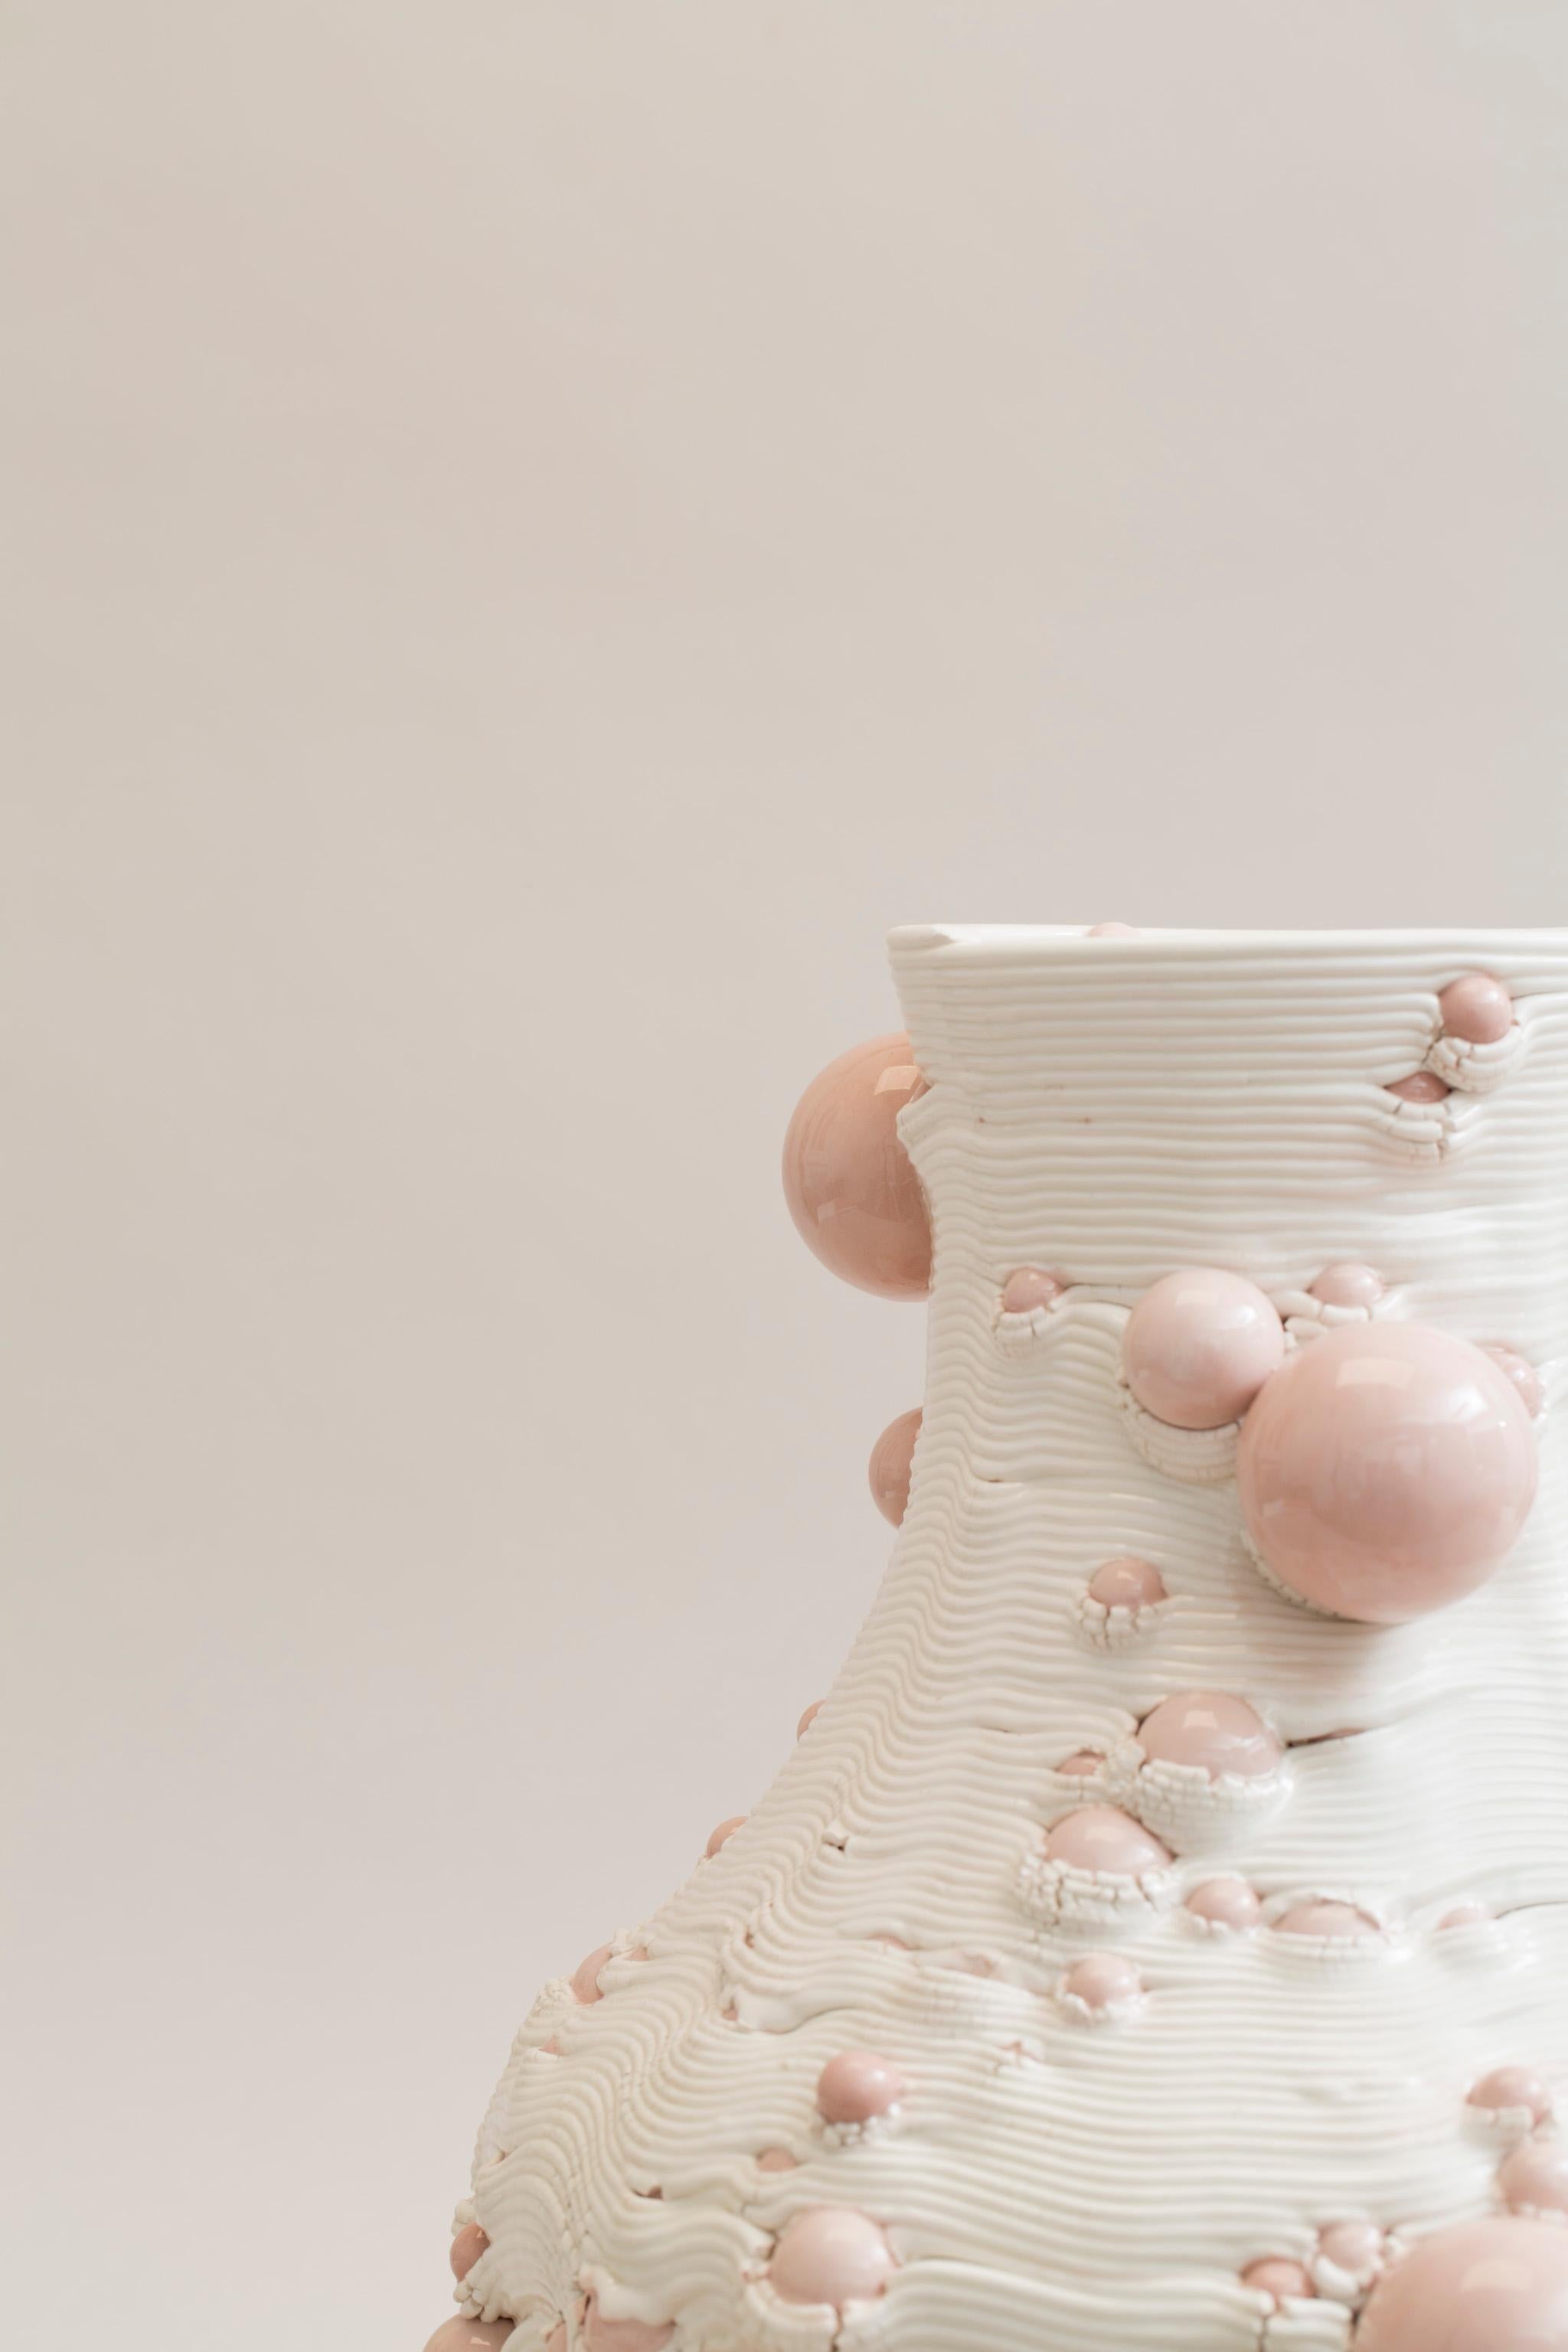 White Ceramic Sculptural Vase Italian Contemporary, 21st Century contemporary For Sale 10